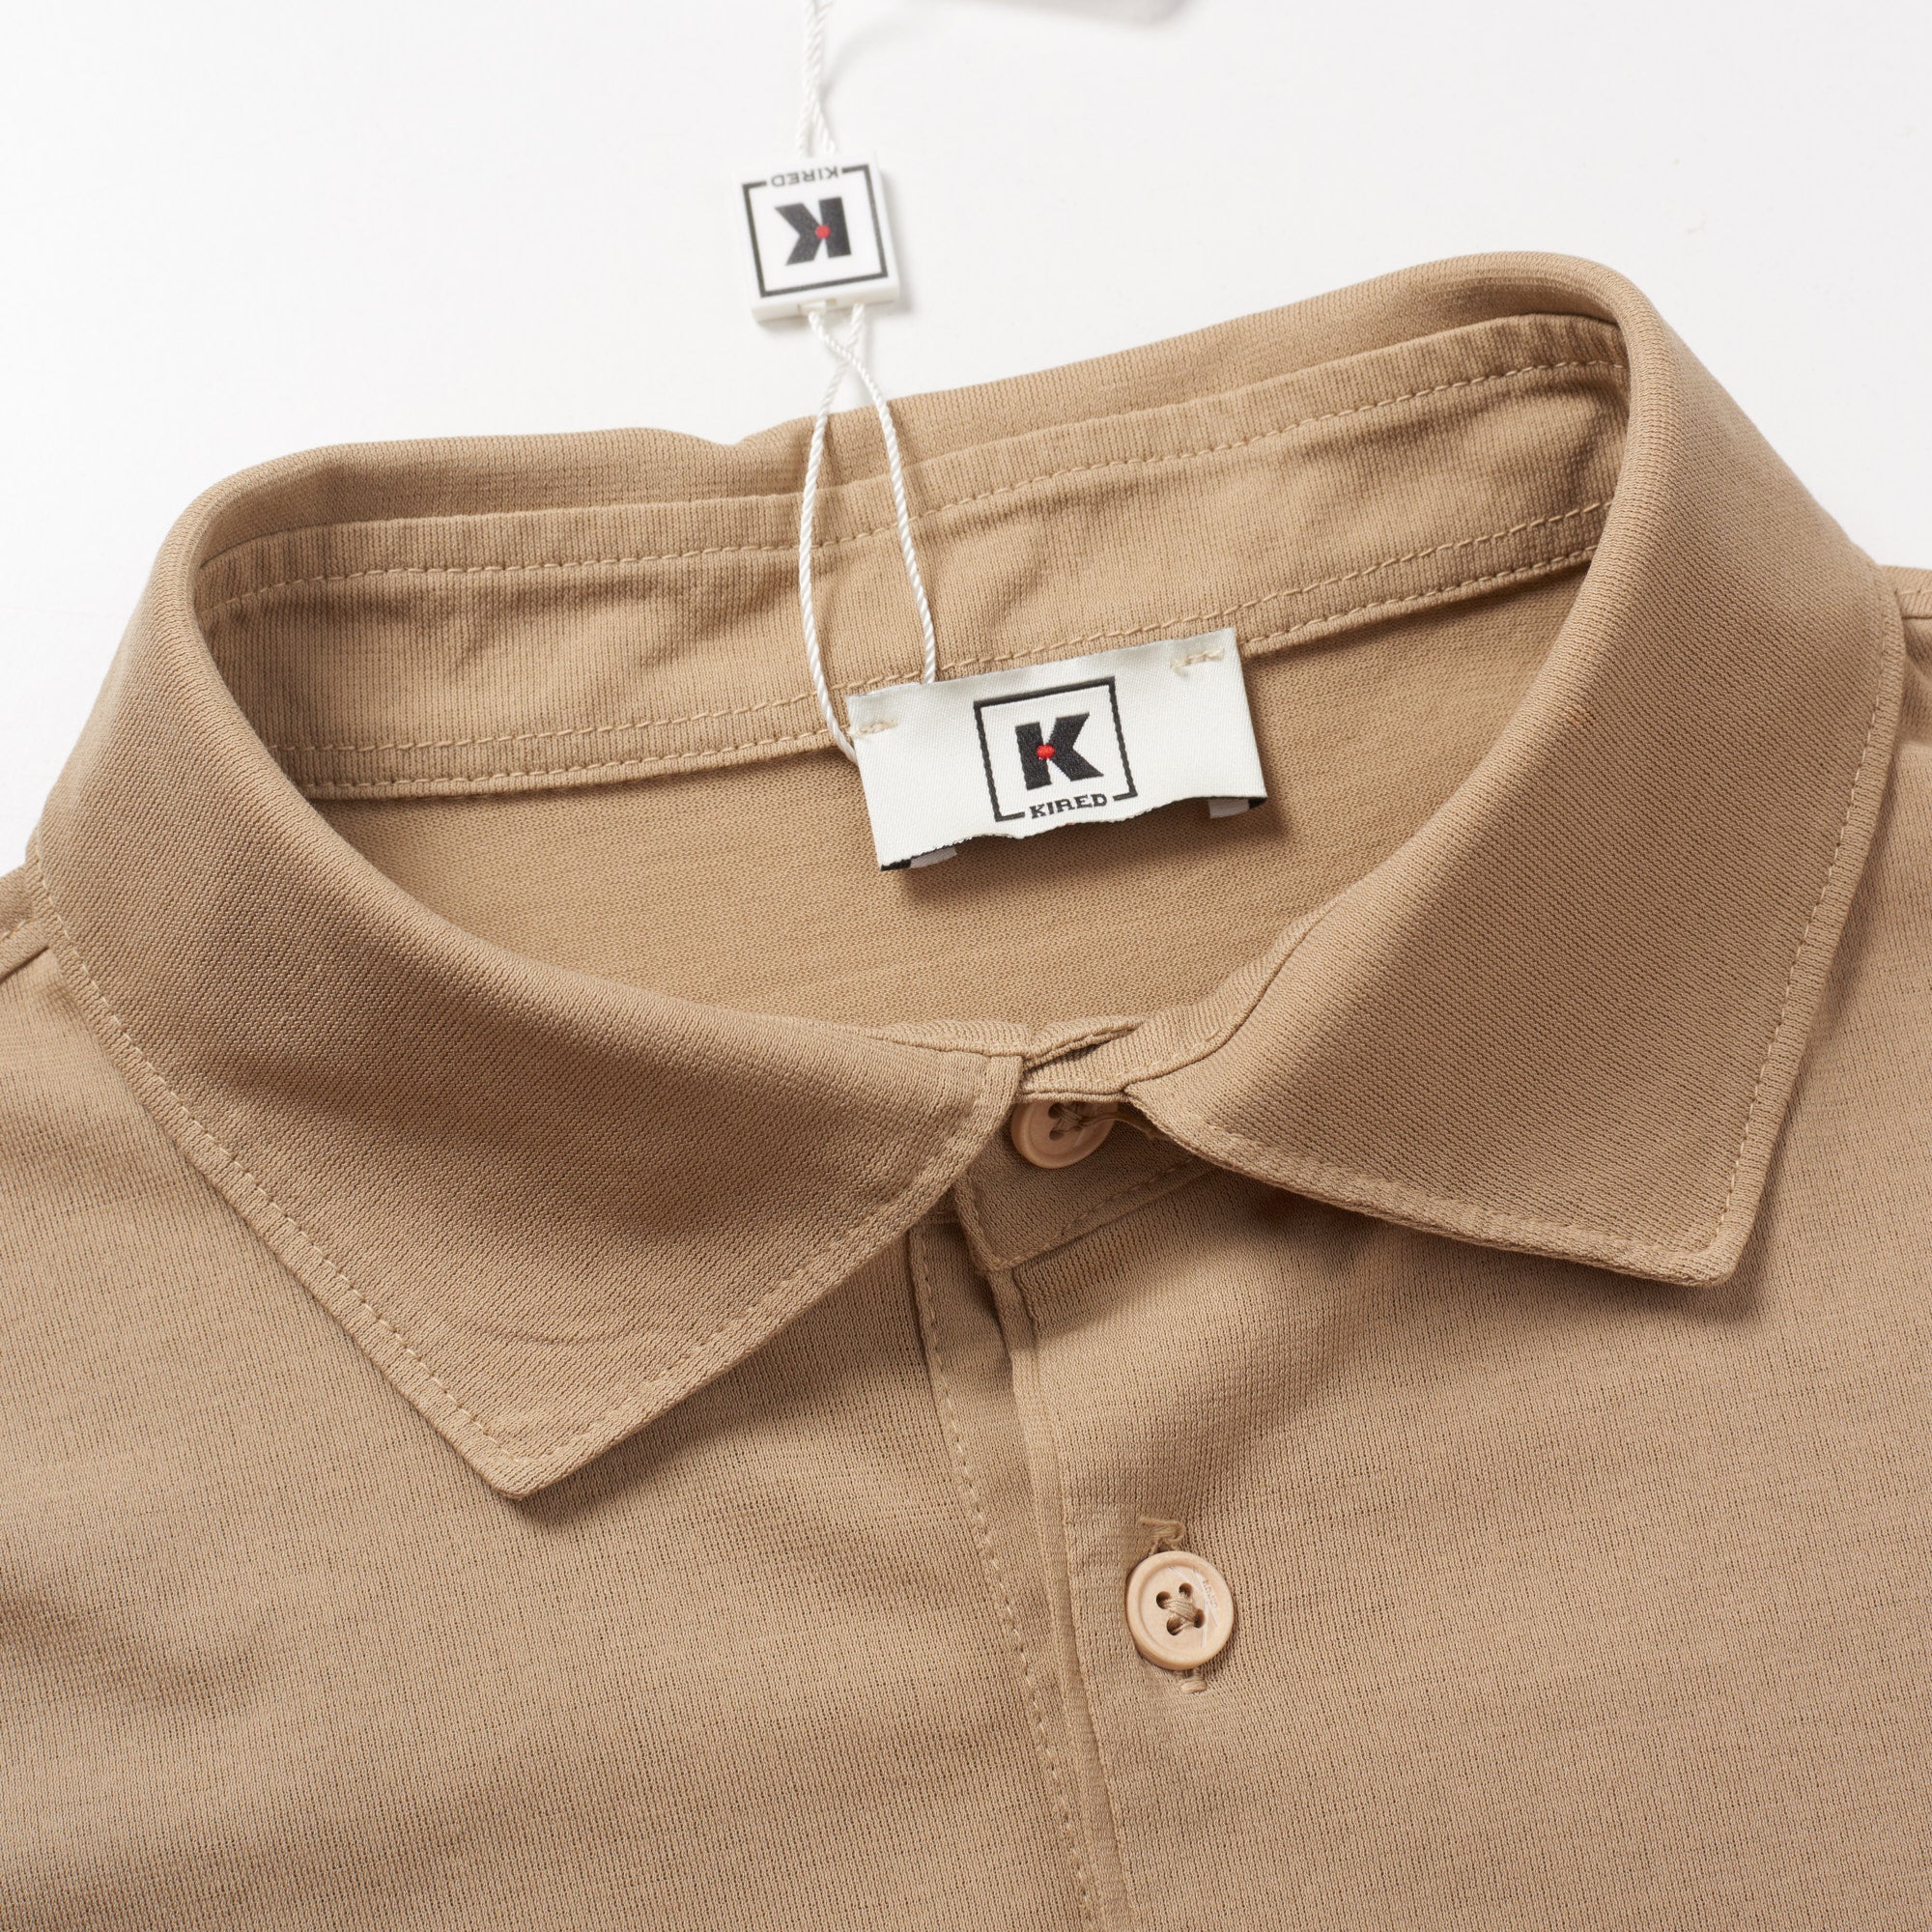 Kiton KIRED "Positano" Tan Exclusive Crepe Cotton Short Sleeve Polo Shirt 2023 KIRED